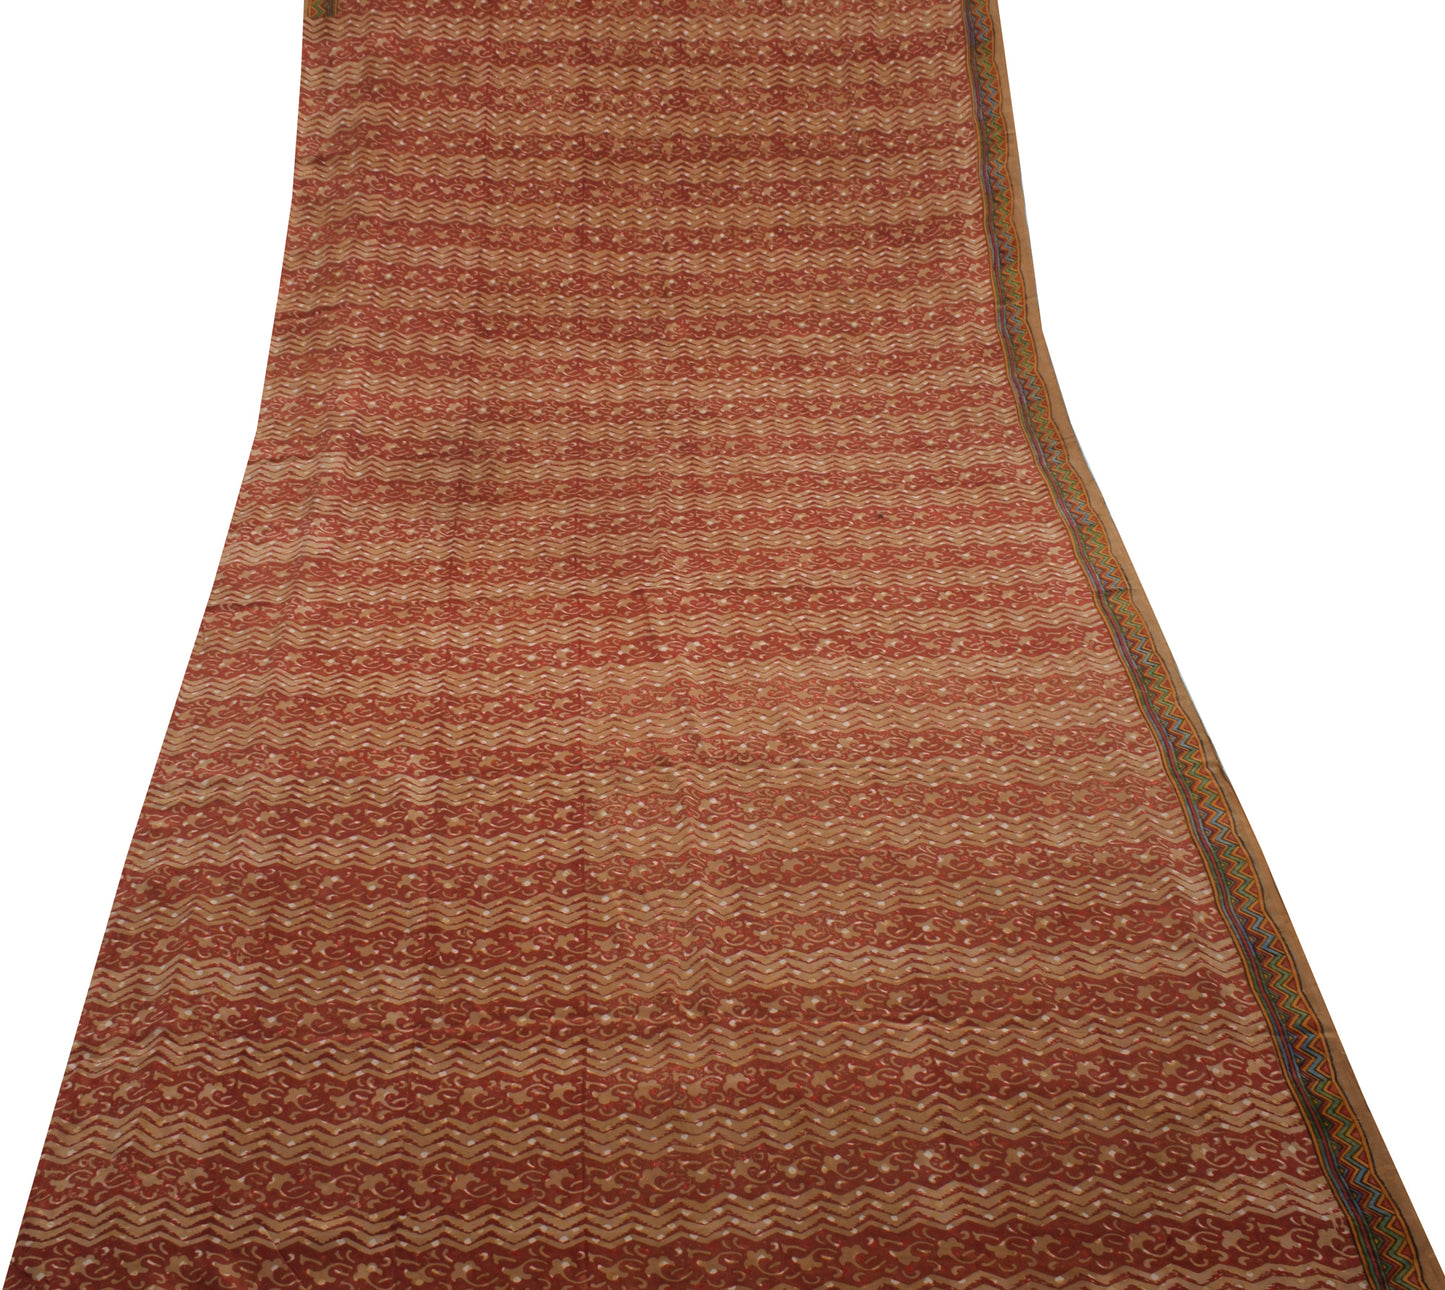 Sushila Vintage Brown Saree 100% Pure Crepe Silk Hand Block Printed Soft Fabric